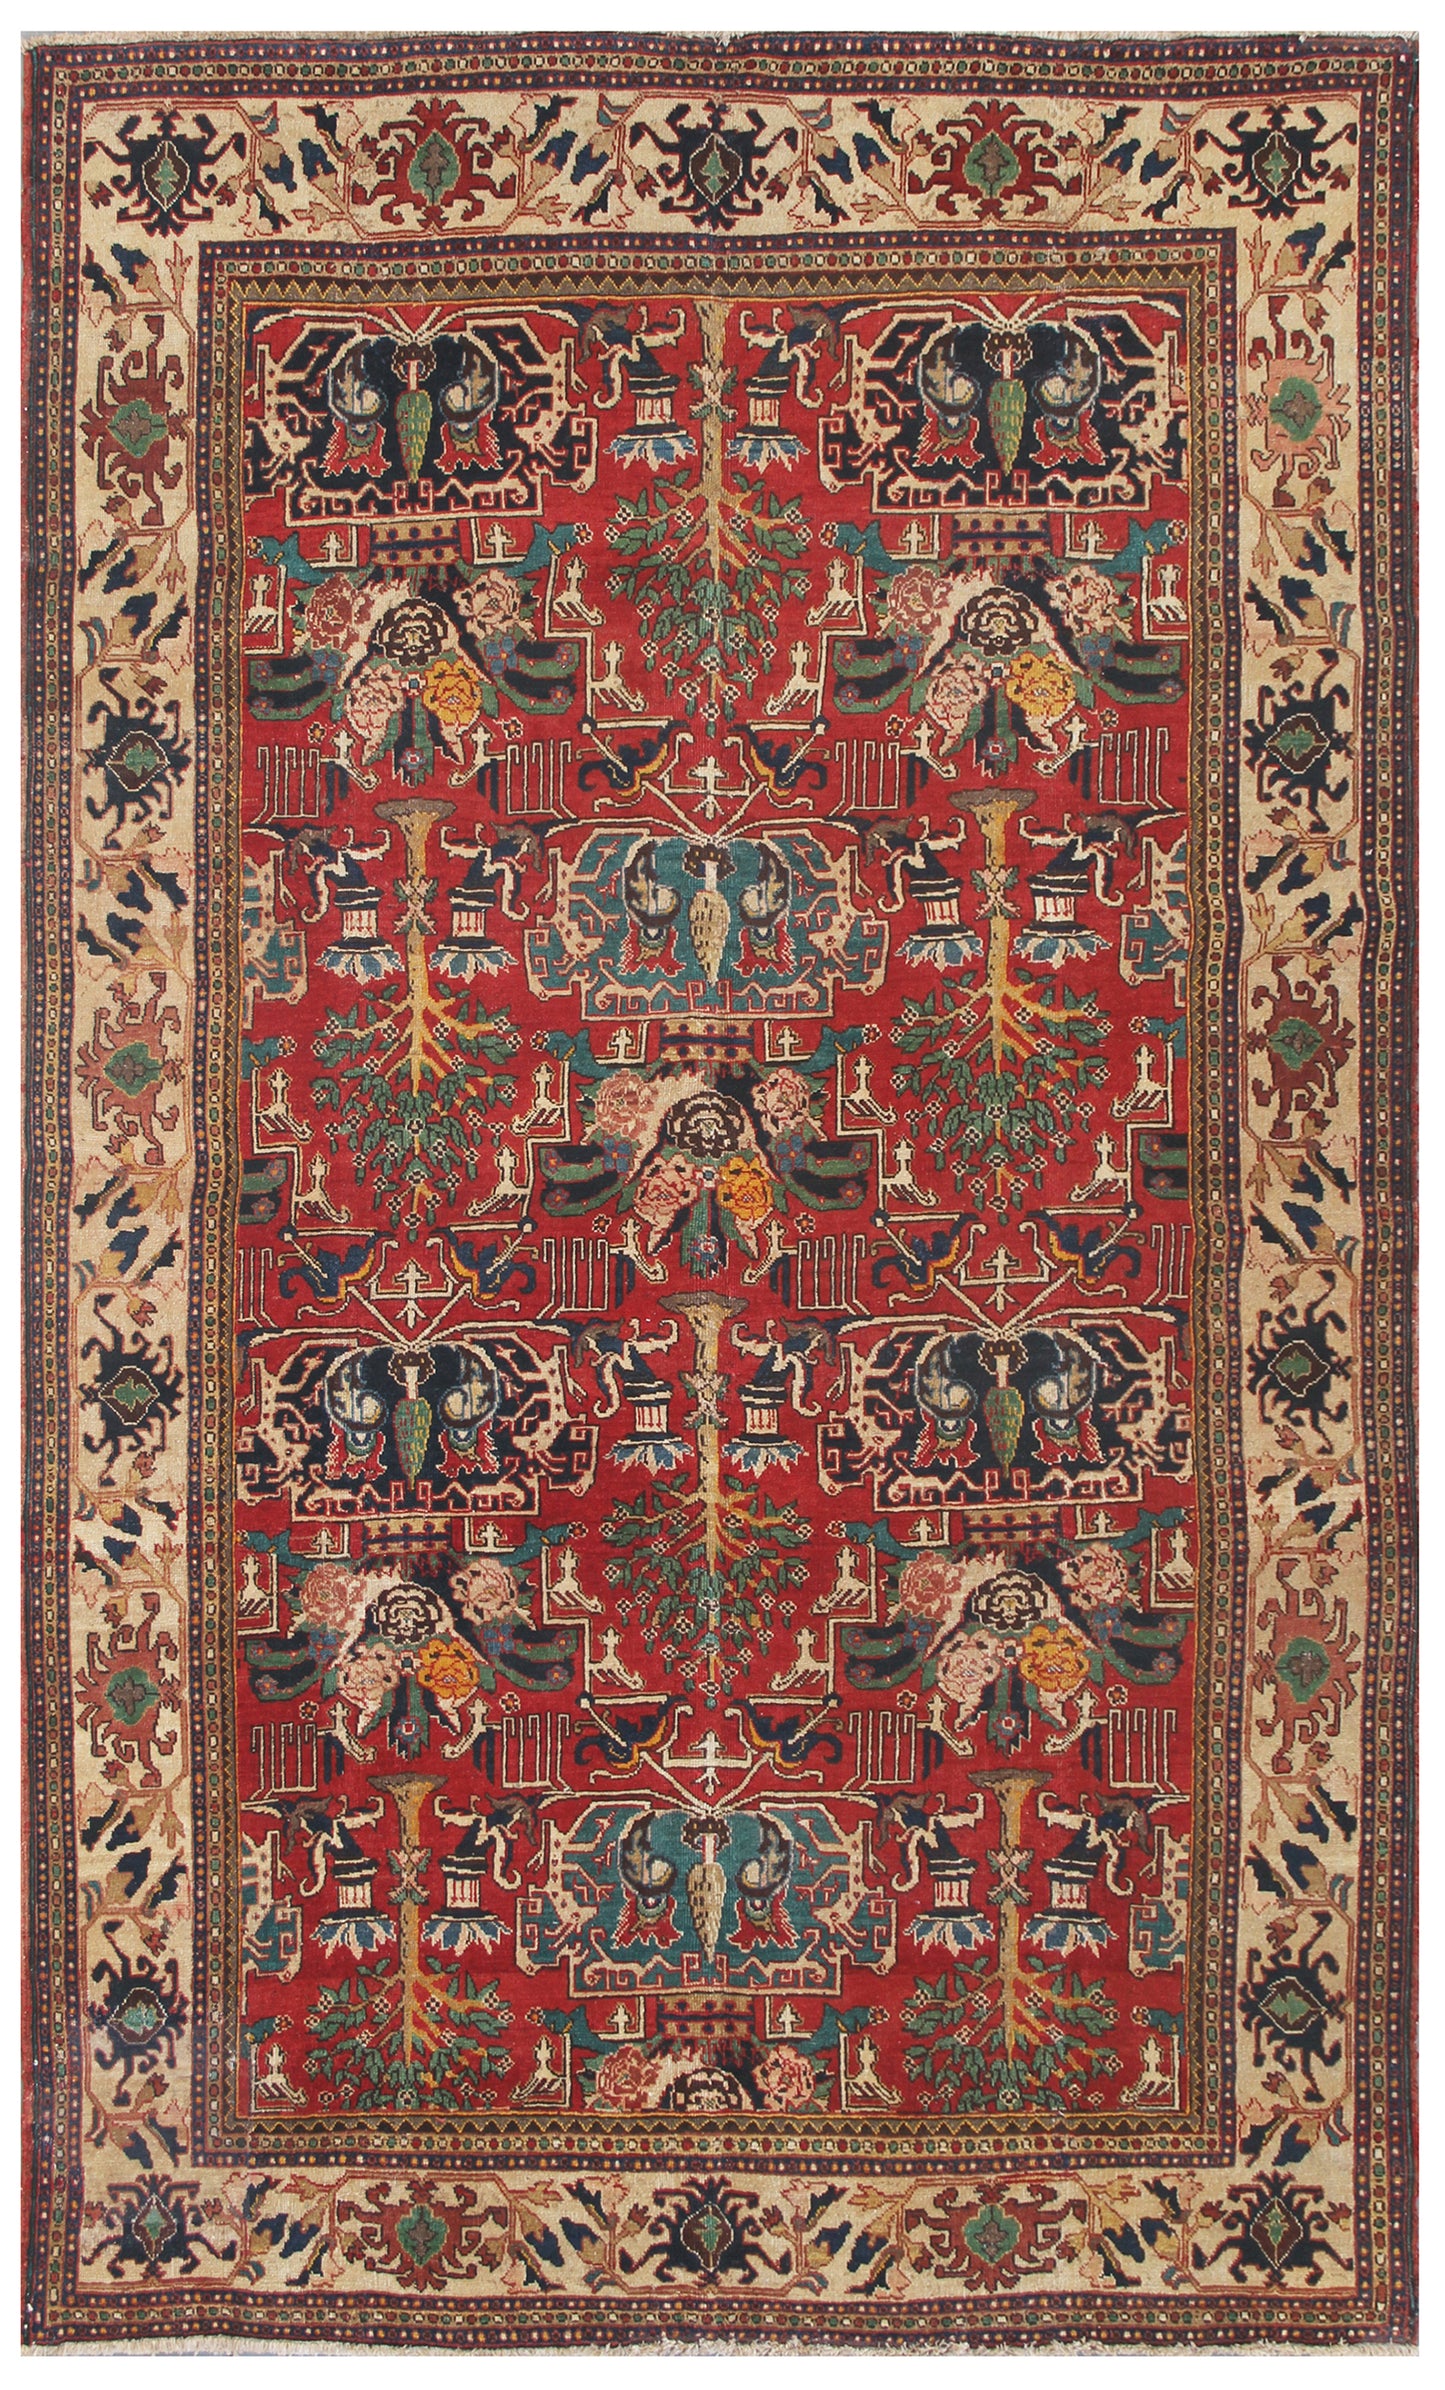 8'x10' Vintage Antique Persian Rug